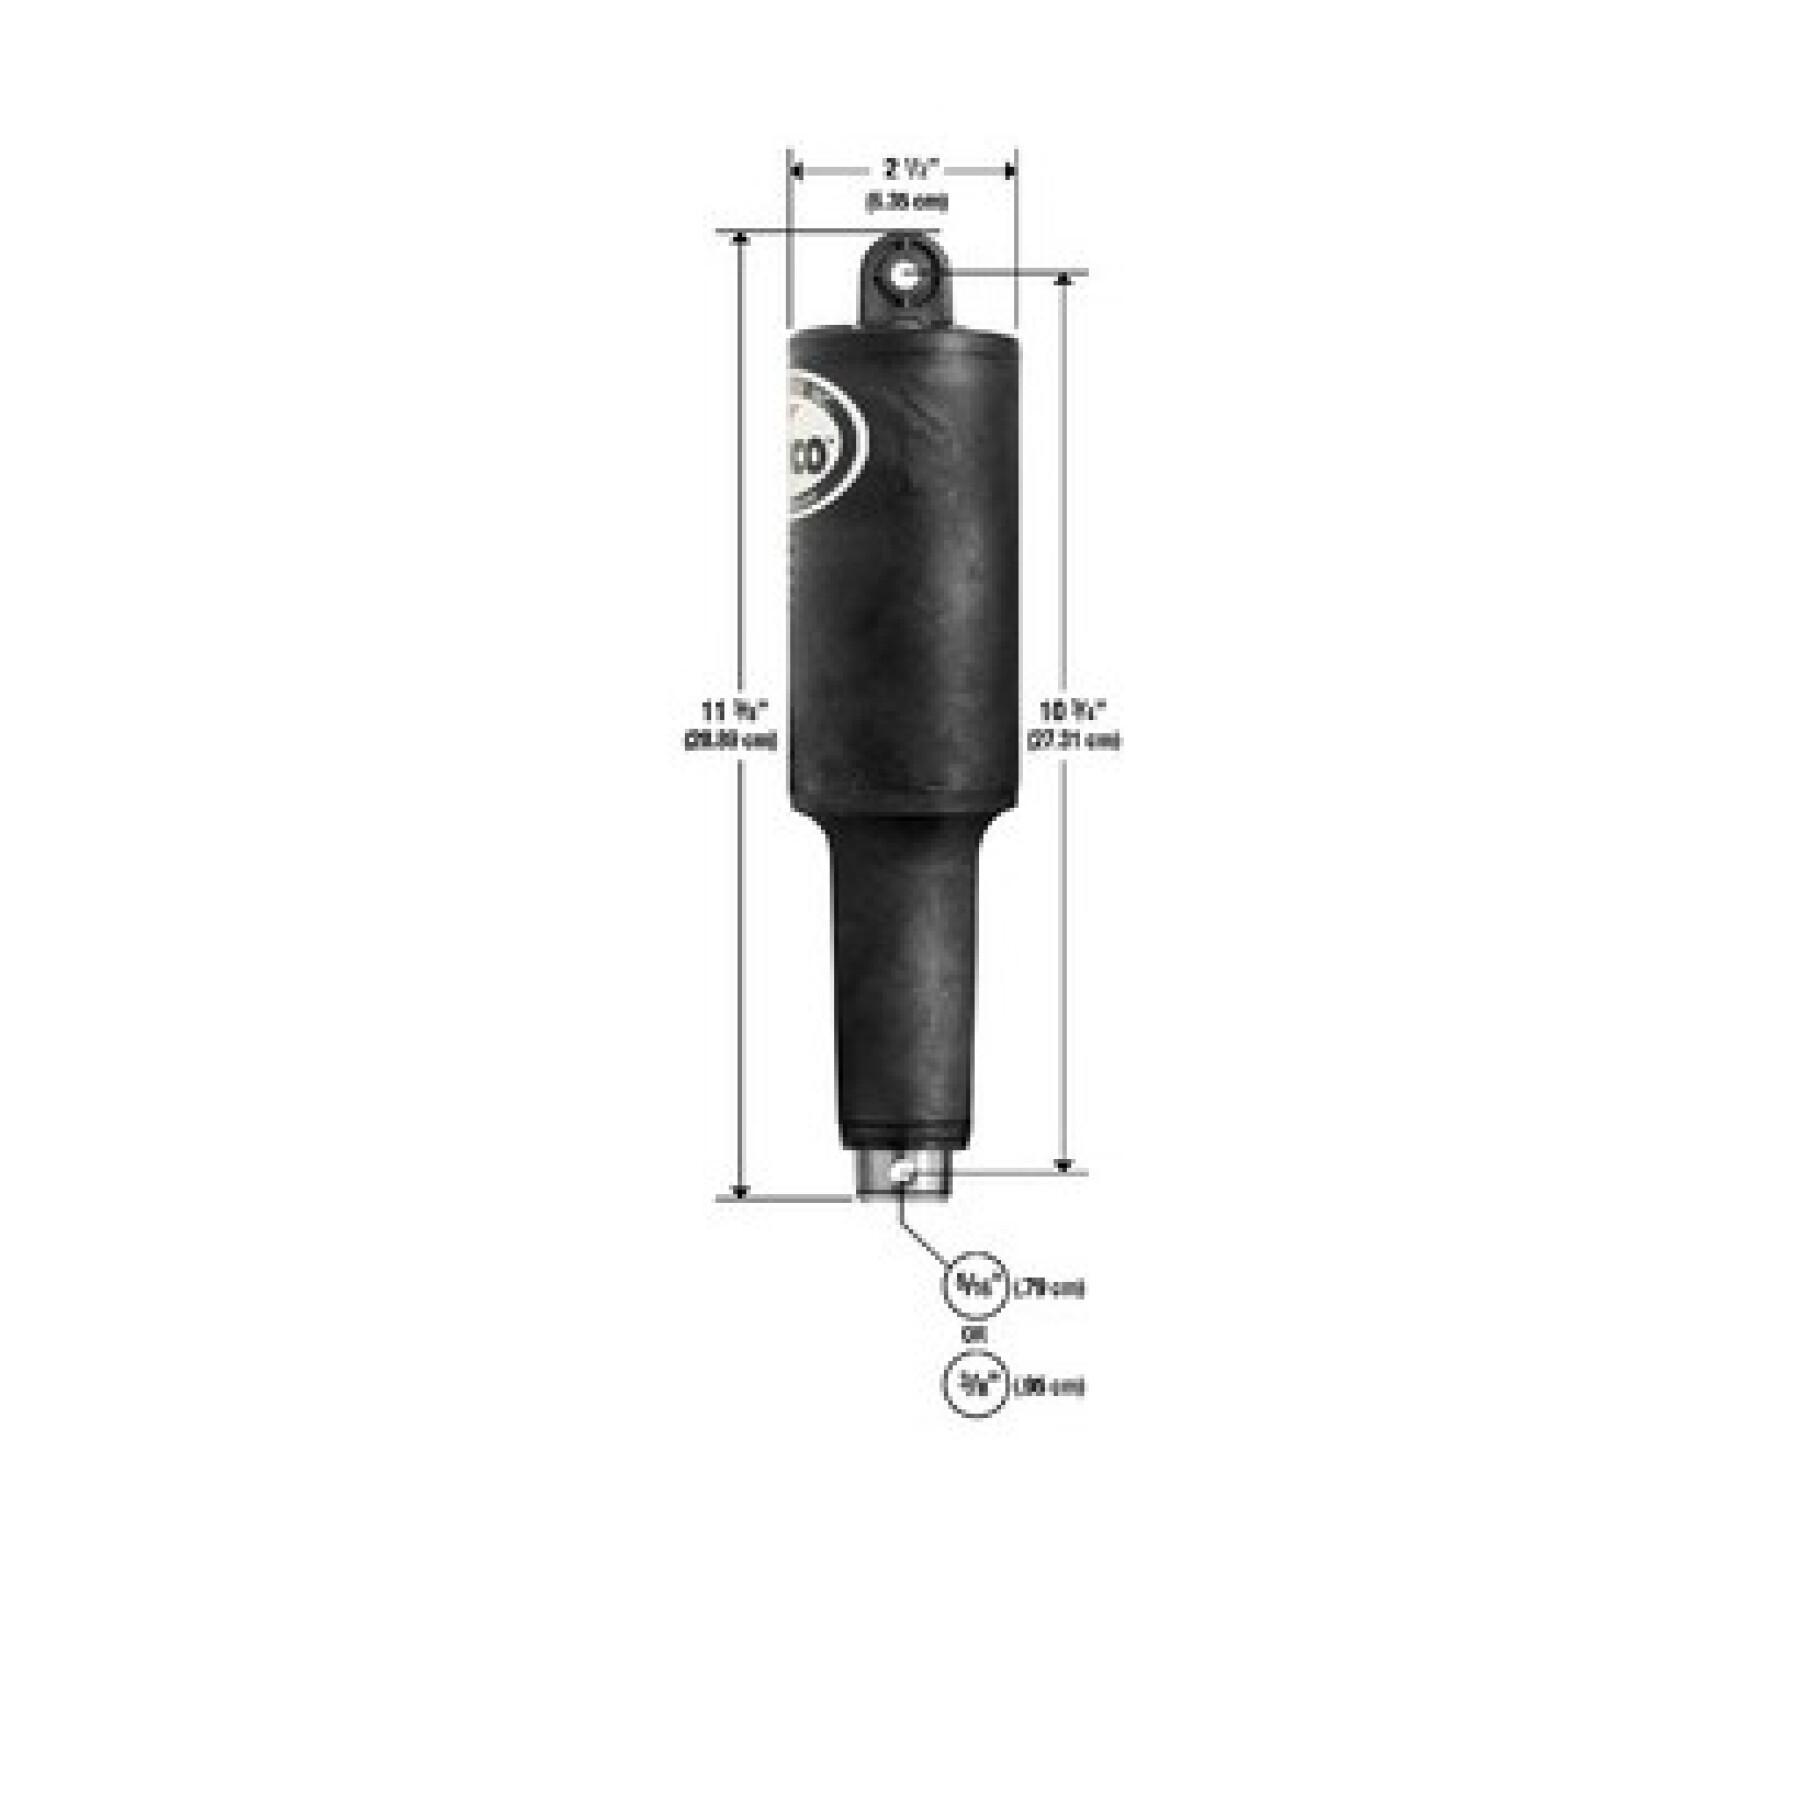 Reinforced cylinder Lenco Marine Inc. 15063-001 24 V, L : 28.89 cm, percage = 0.95 cm